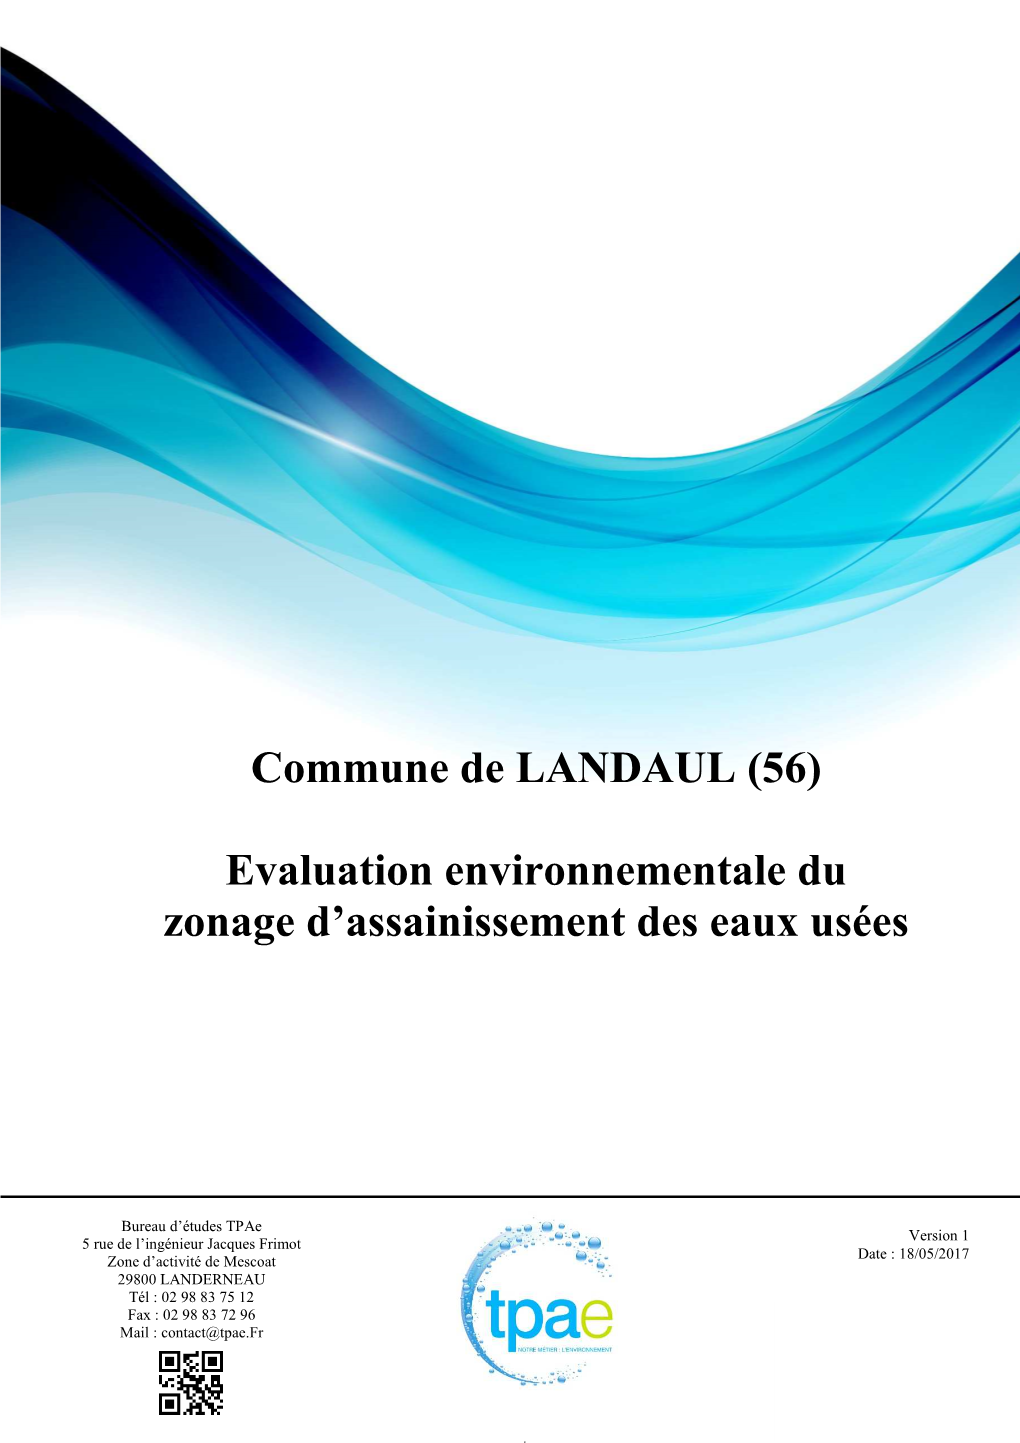 Evaluation Environnementale Zonage EU LANDAUL V1 18-05-17